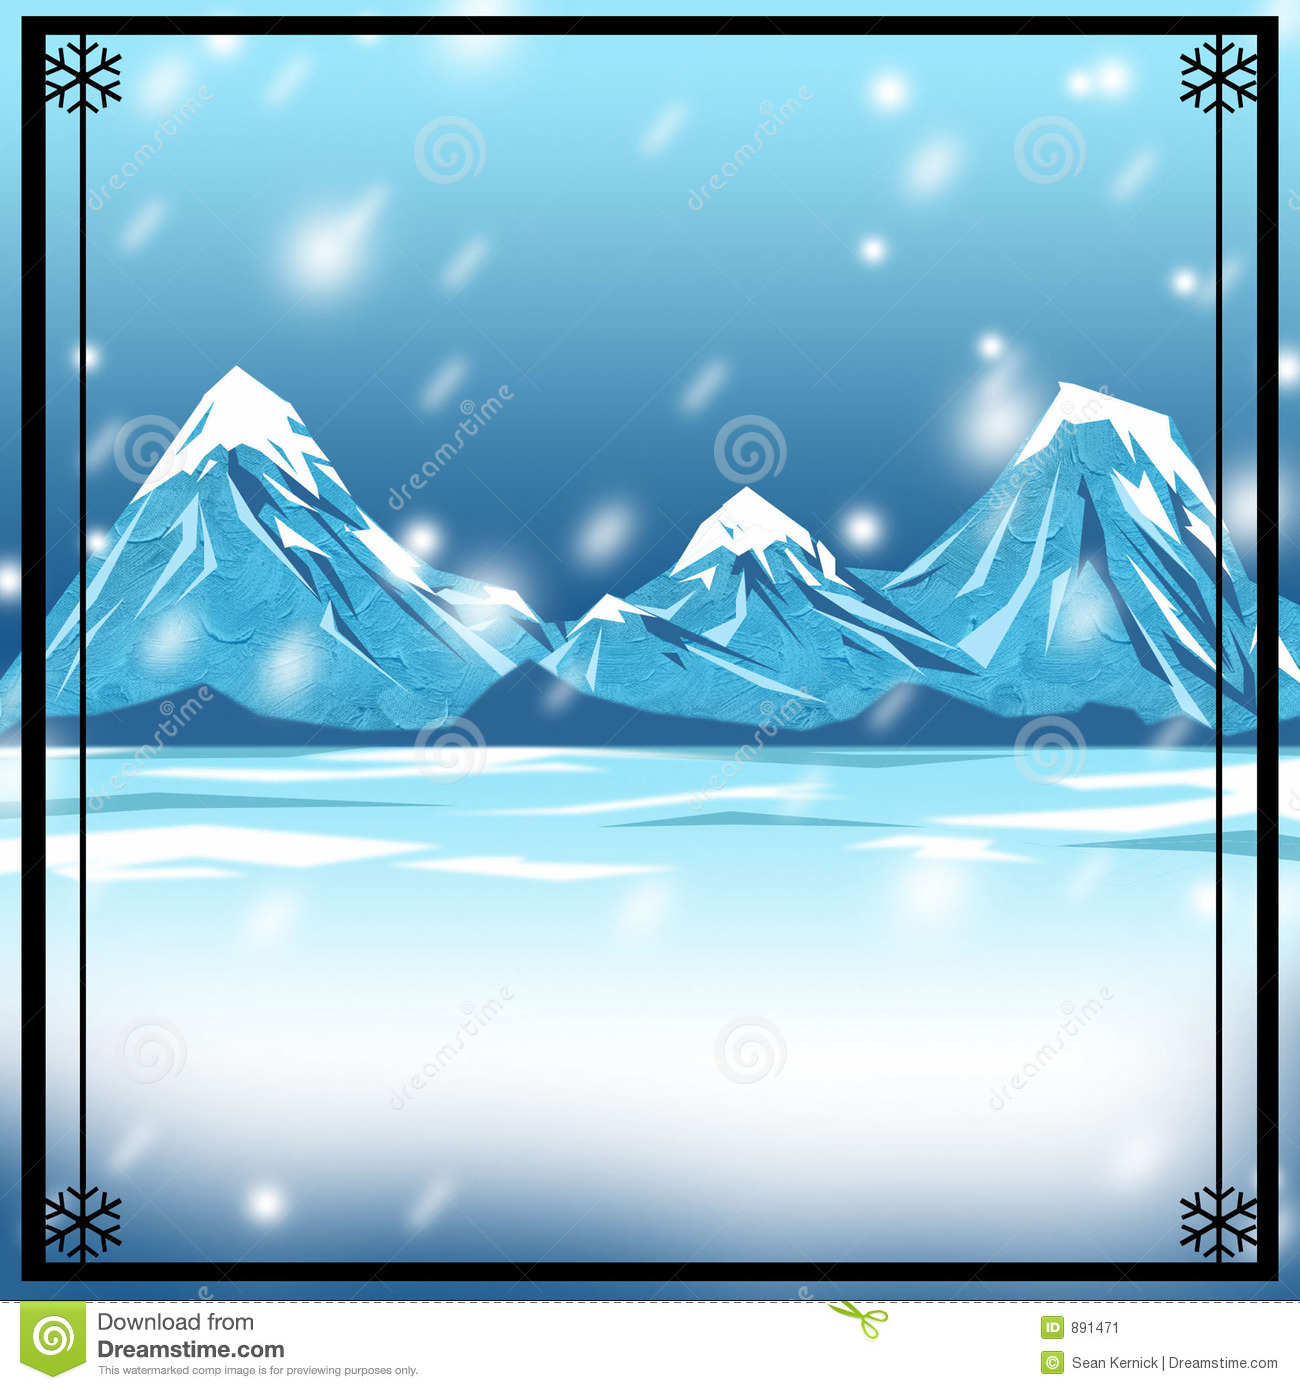 Snowy Winter Backdrop Background Stock Image   Image  891471